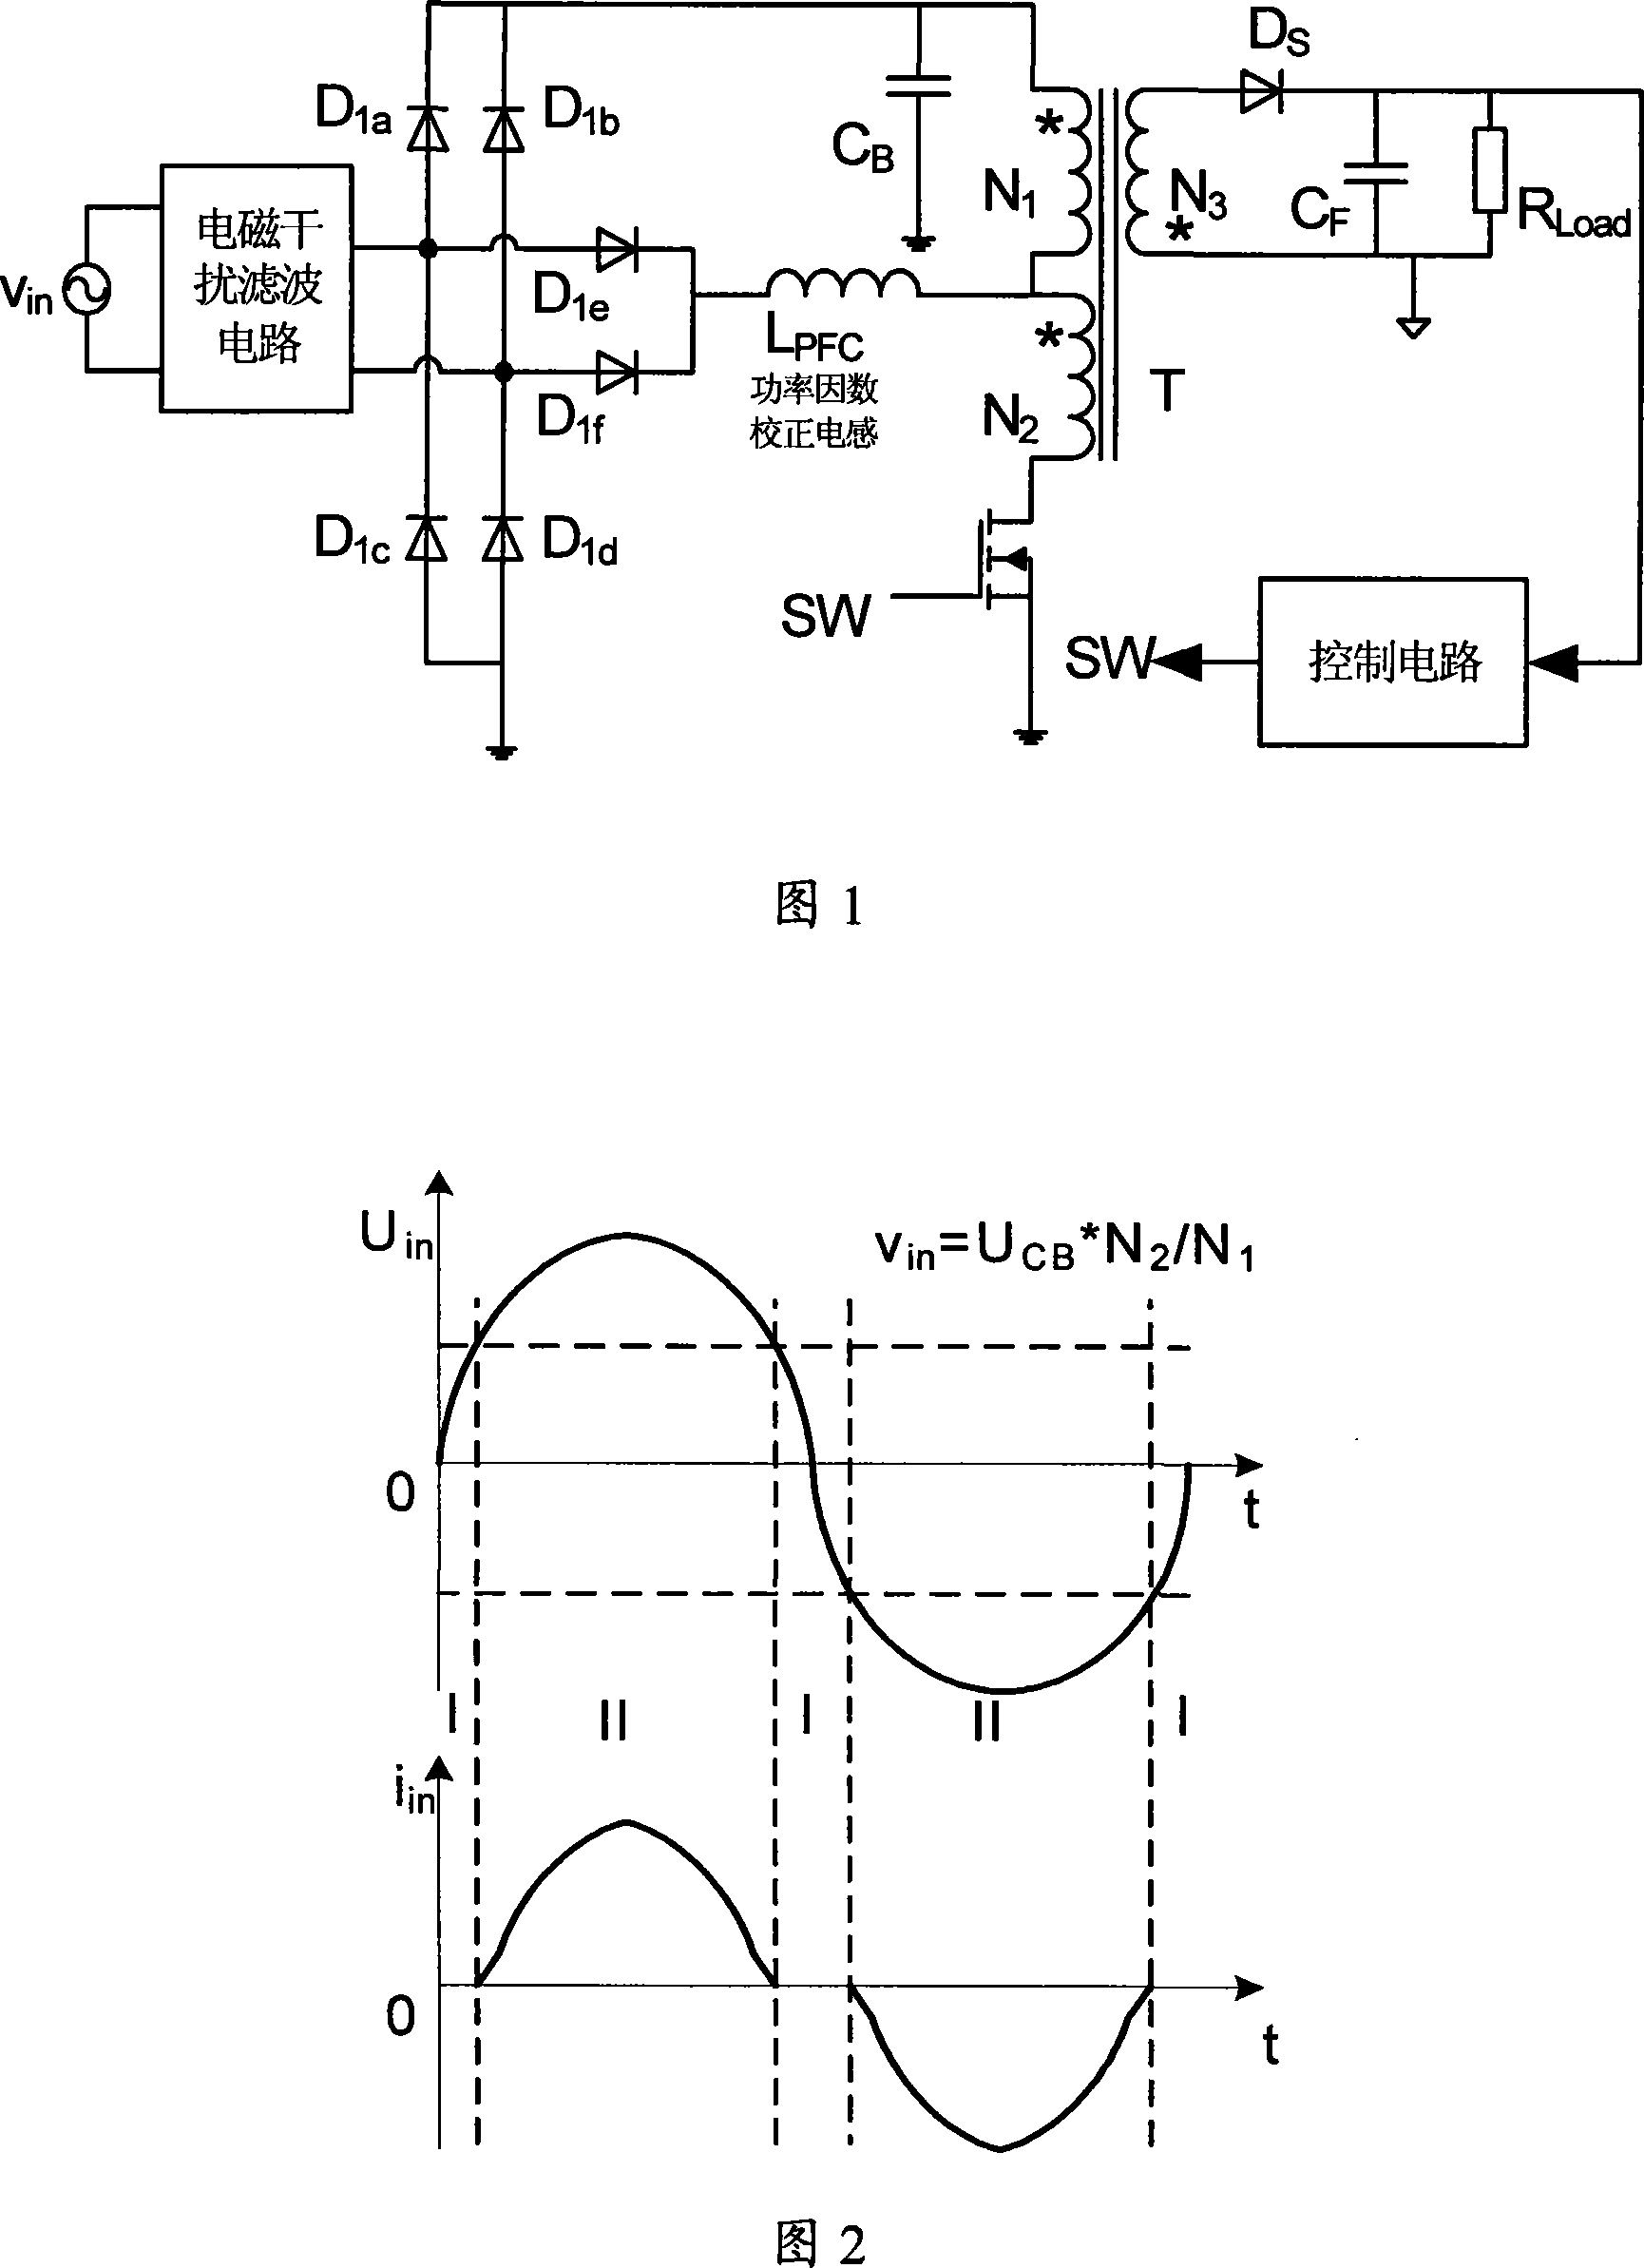 EMI-reducing single-stage power factor correcting circuit